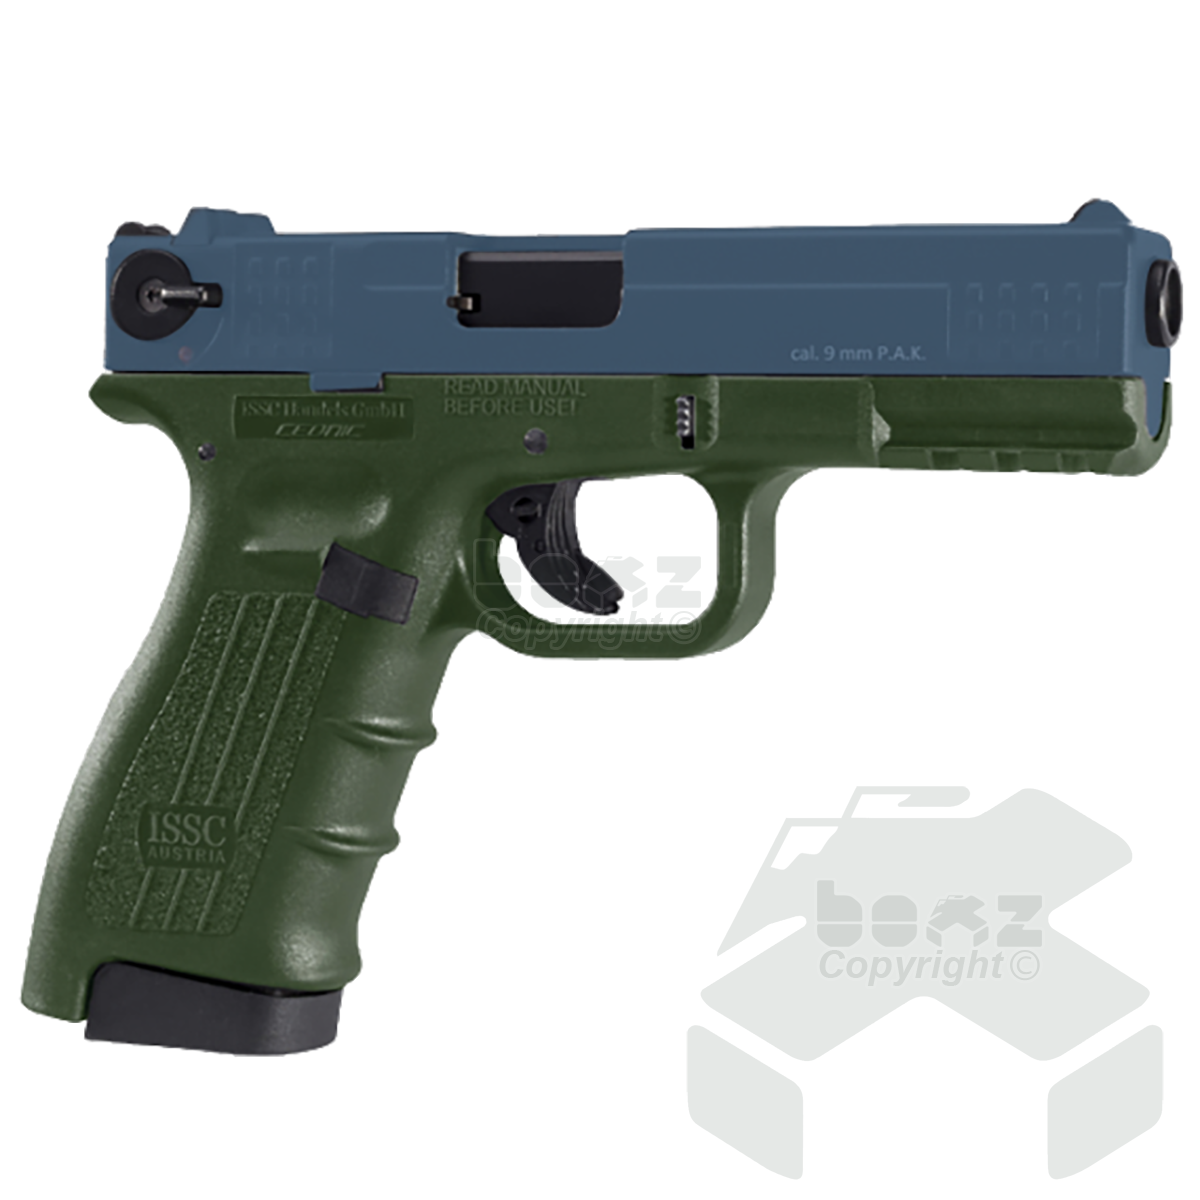 Ceonic M22 Blank Firing Pistol - 9mm - Blue Haki